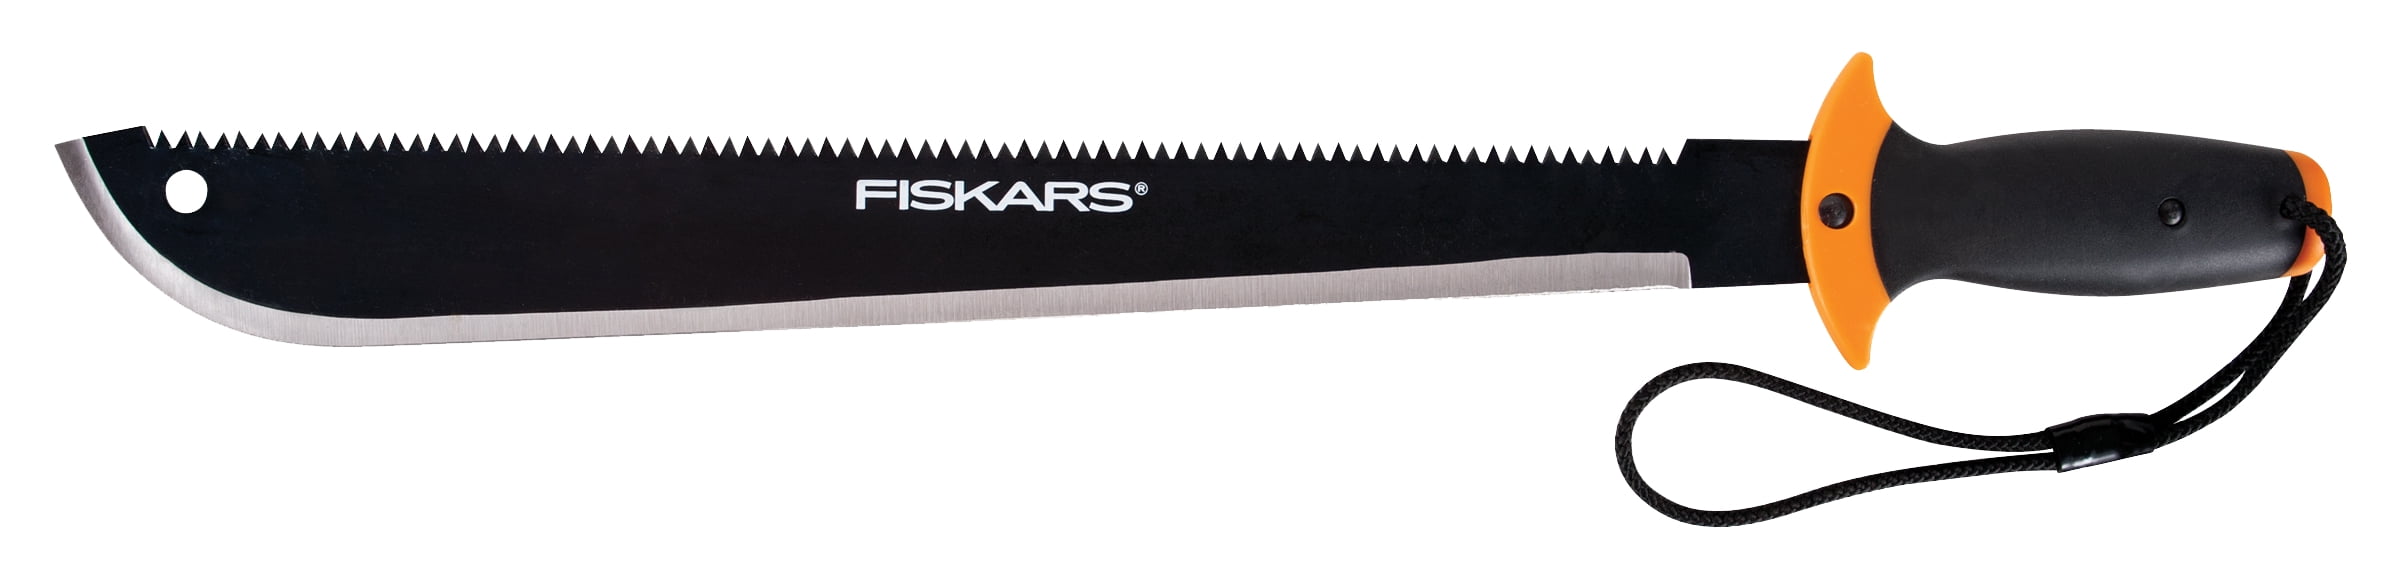 Fiskars 18" Ultra Sharp Machete Saw Combo, Steel Blade with Softgrip Handle